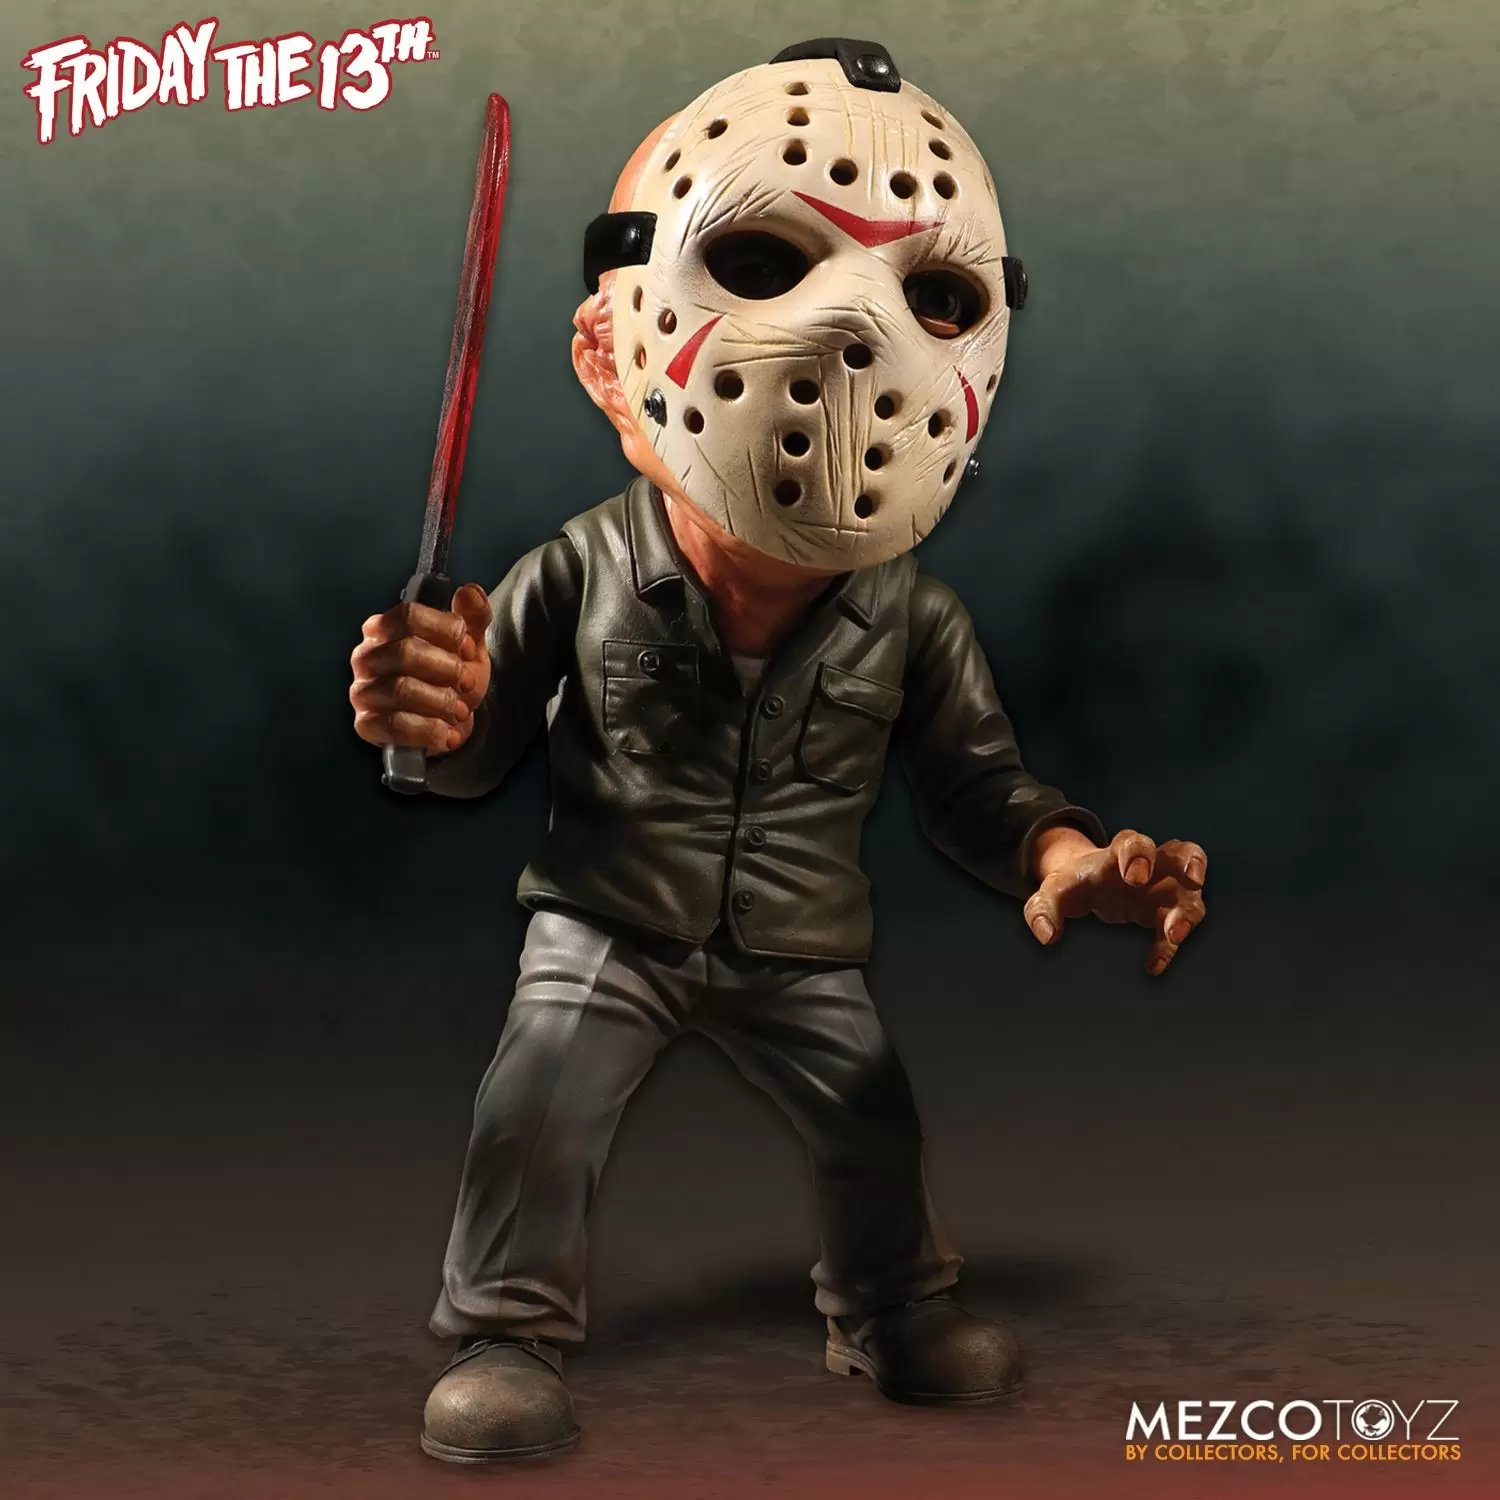 MezcoToyz - Friday The 13th - Deluxe Stylized Jason